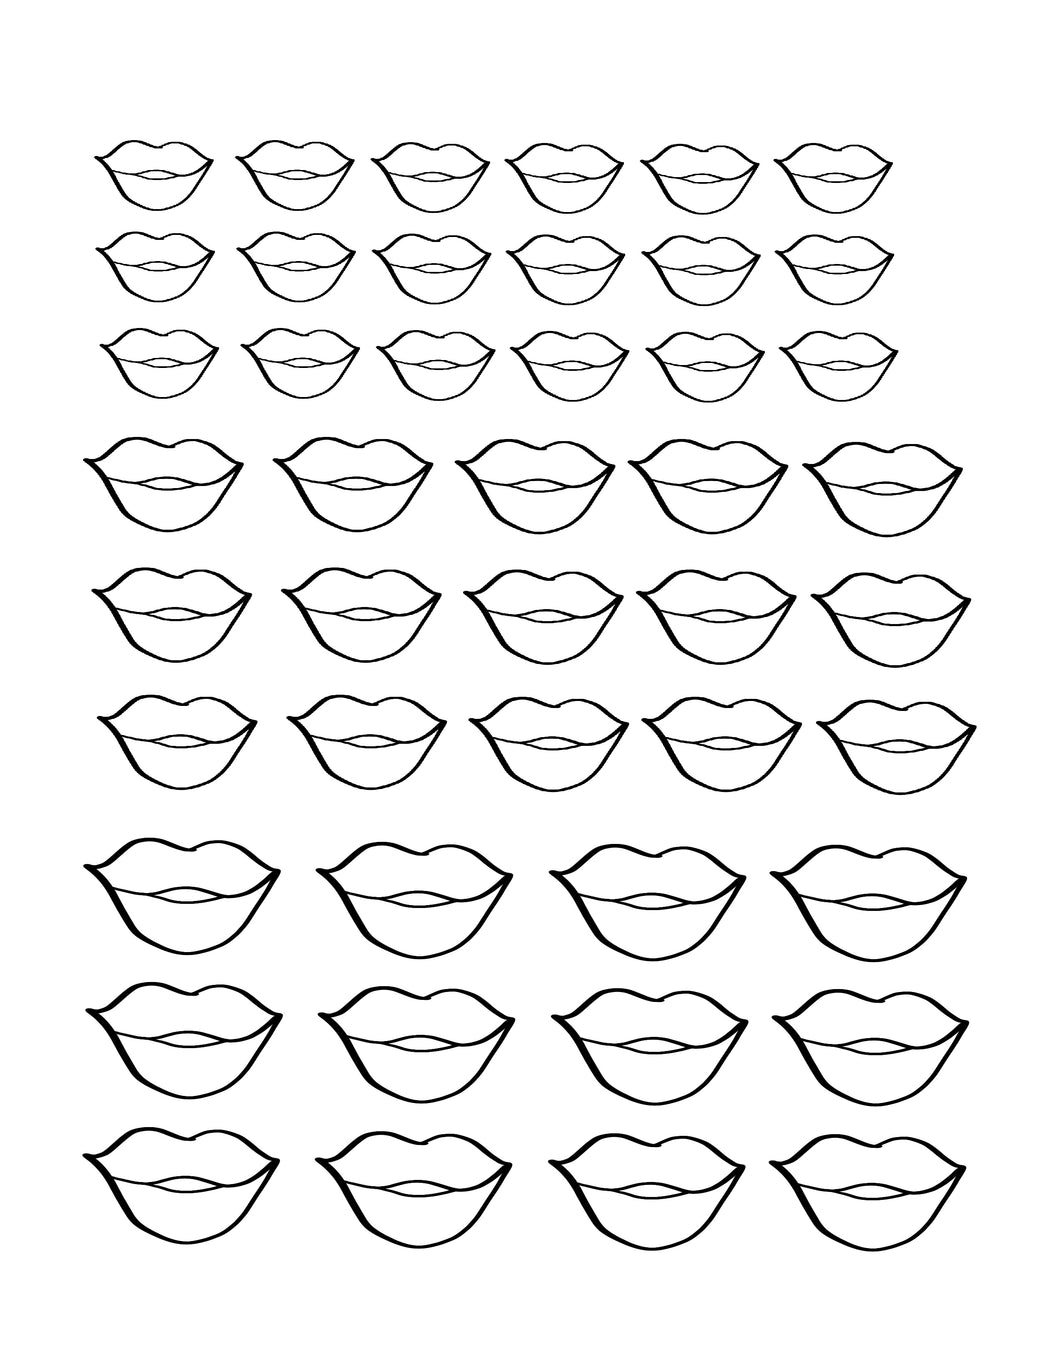 Lips Icing Transfer Sheets - Dots and Bows Designs